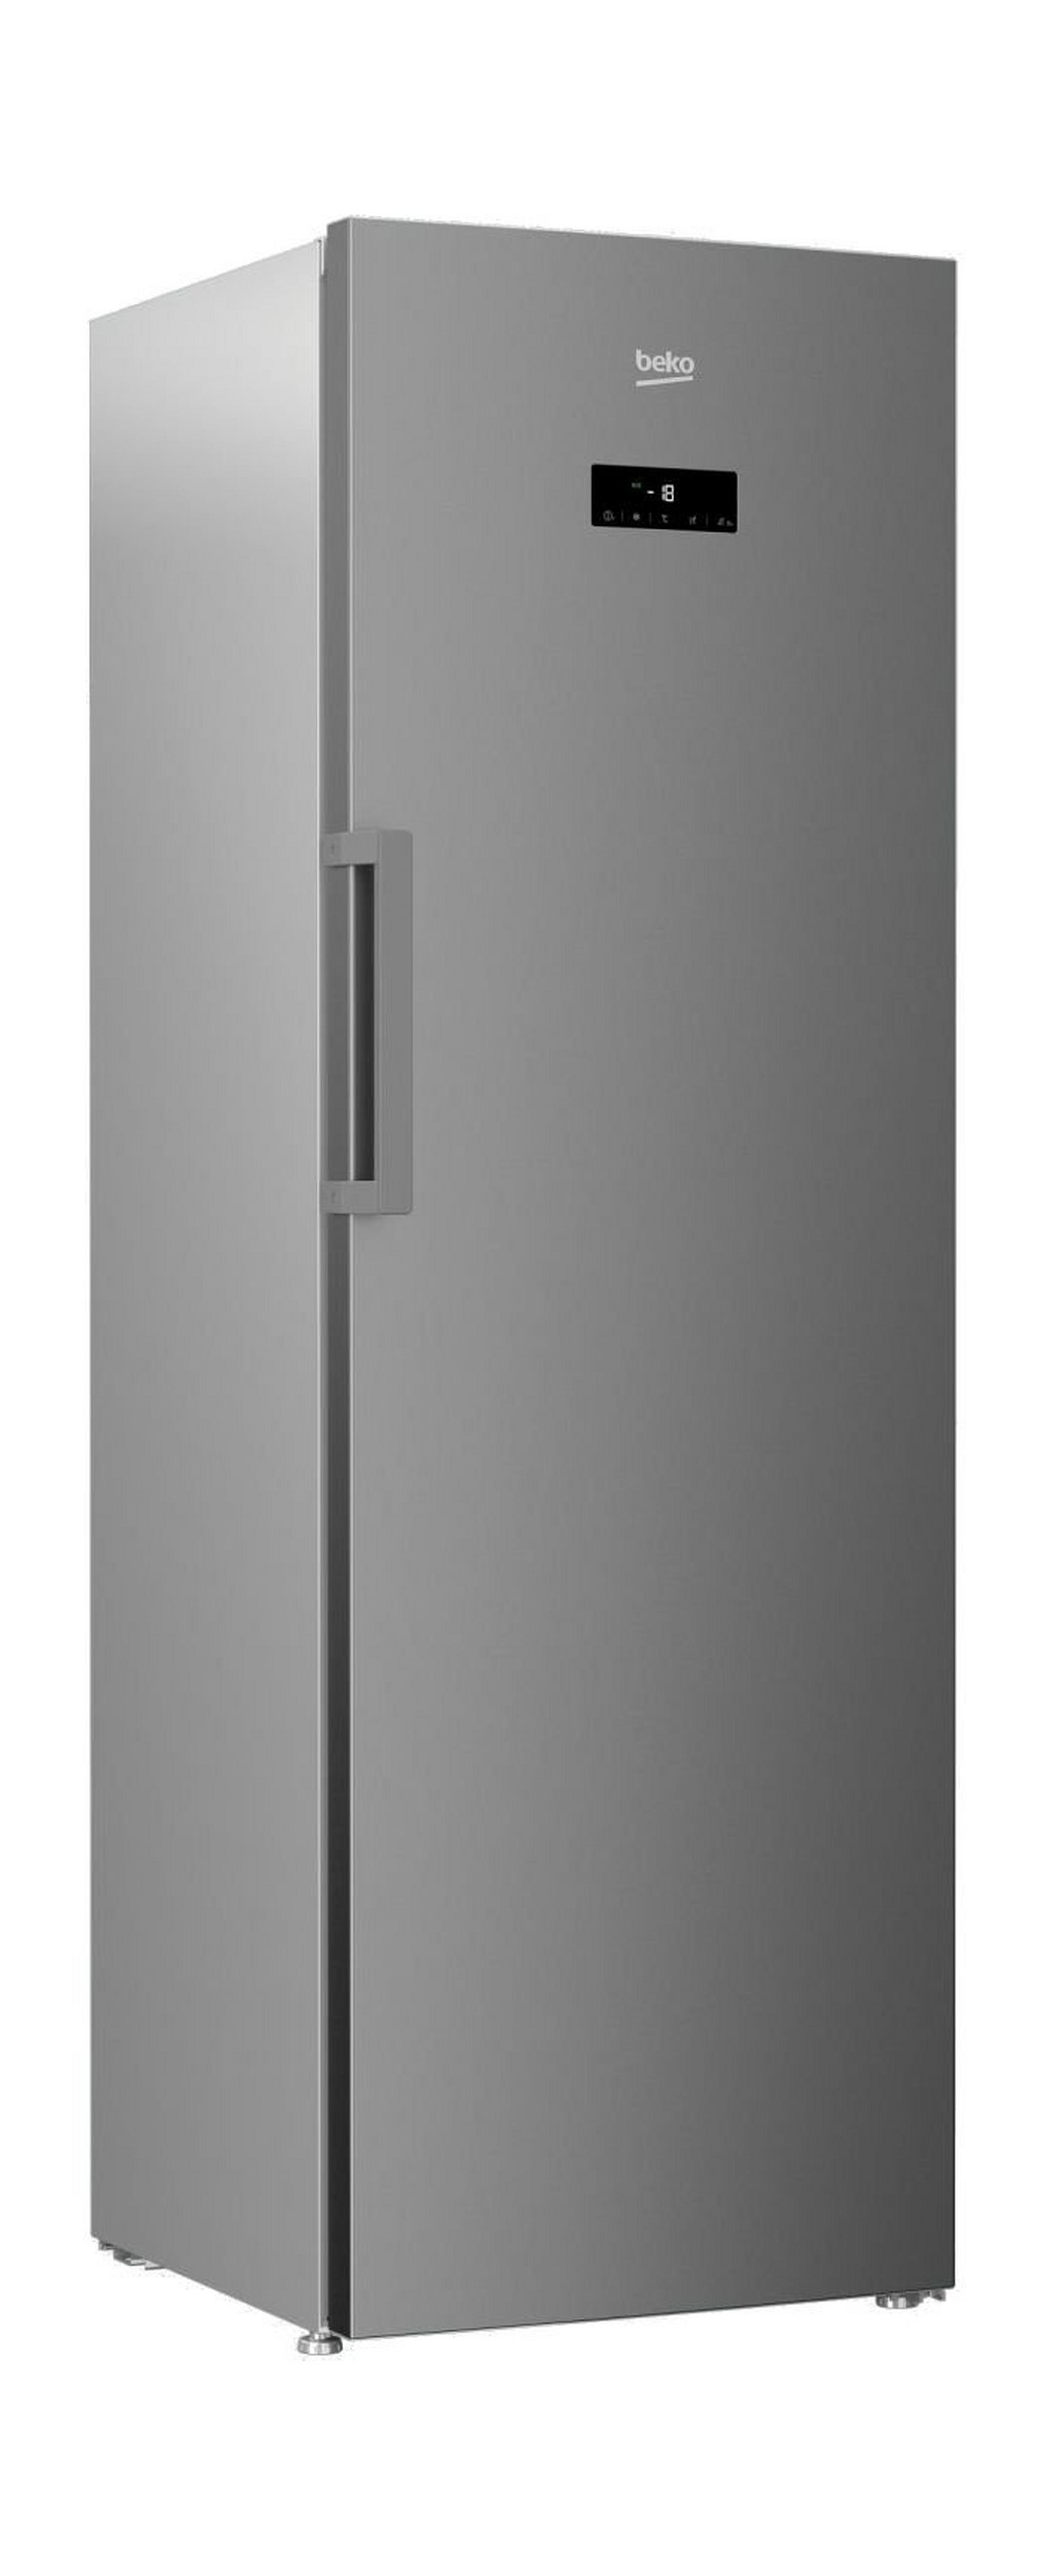 Beko 11 Cft. Upright Freezer (RFNE312E23X)